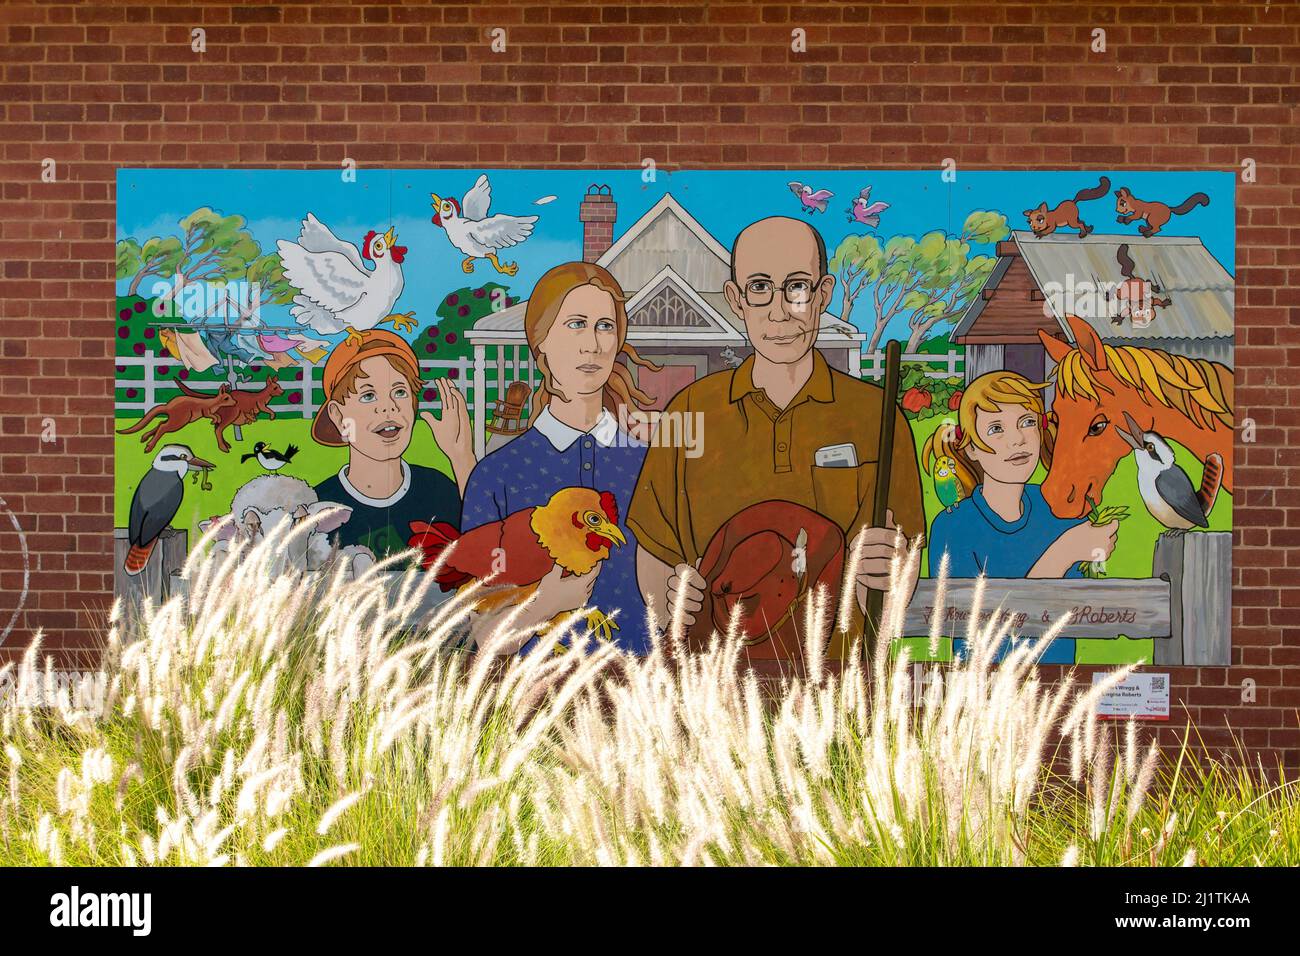 Primary School Mural Art, Rochester, Victoria, Australie Banque D'Images